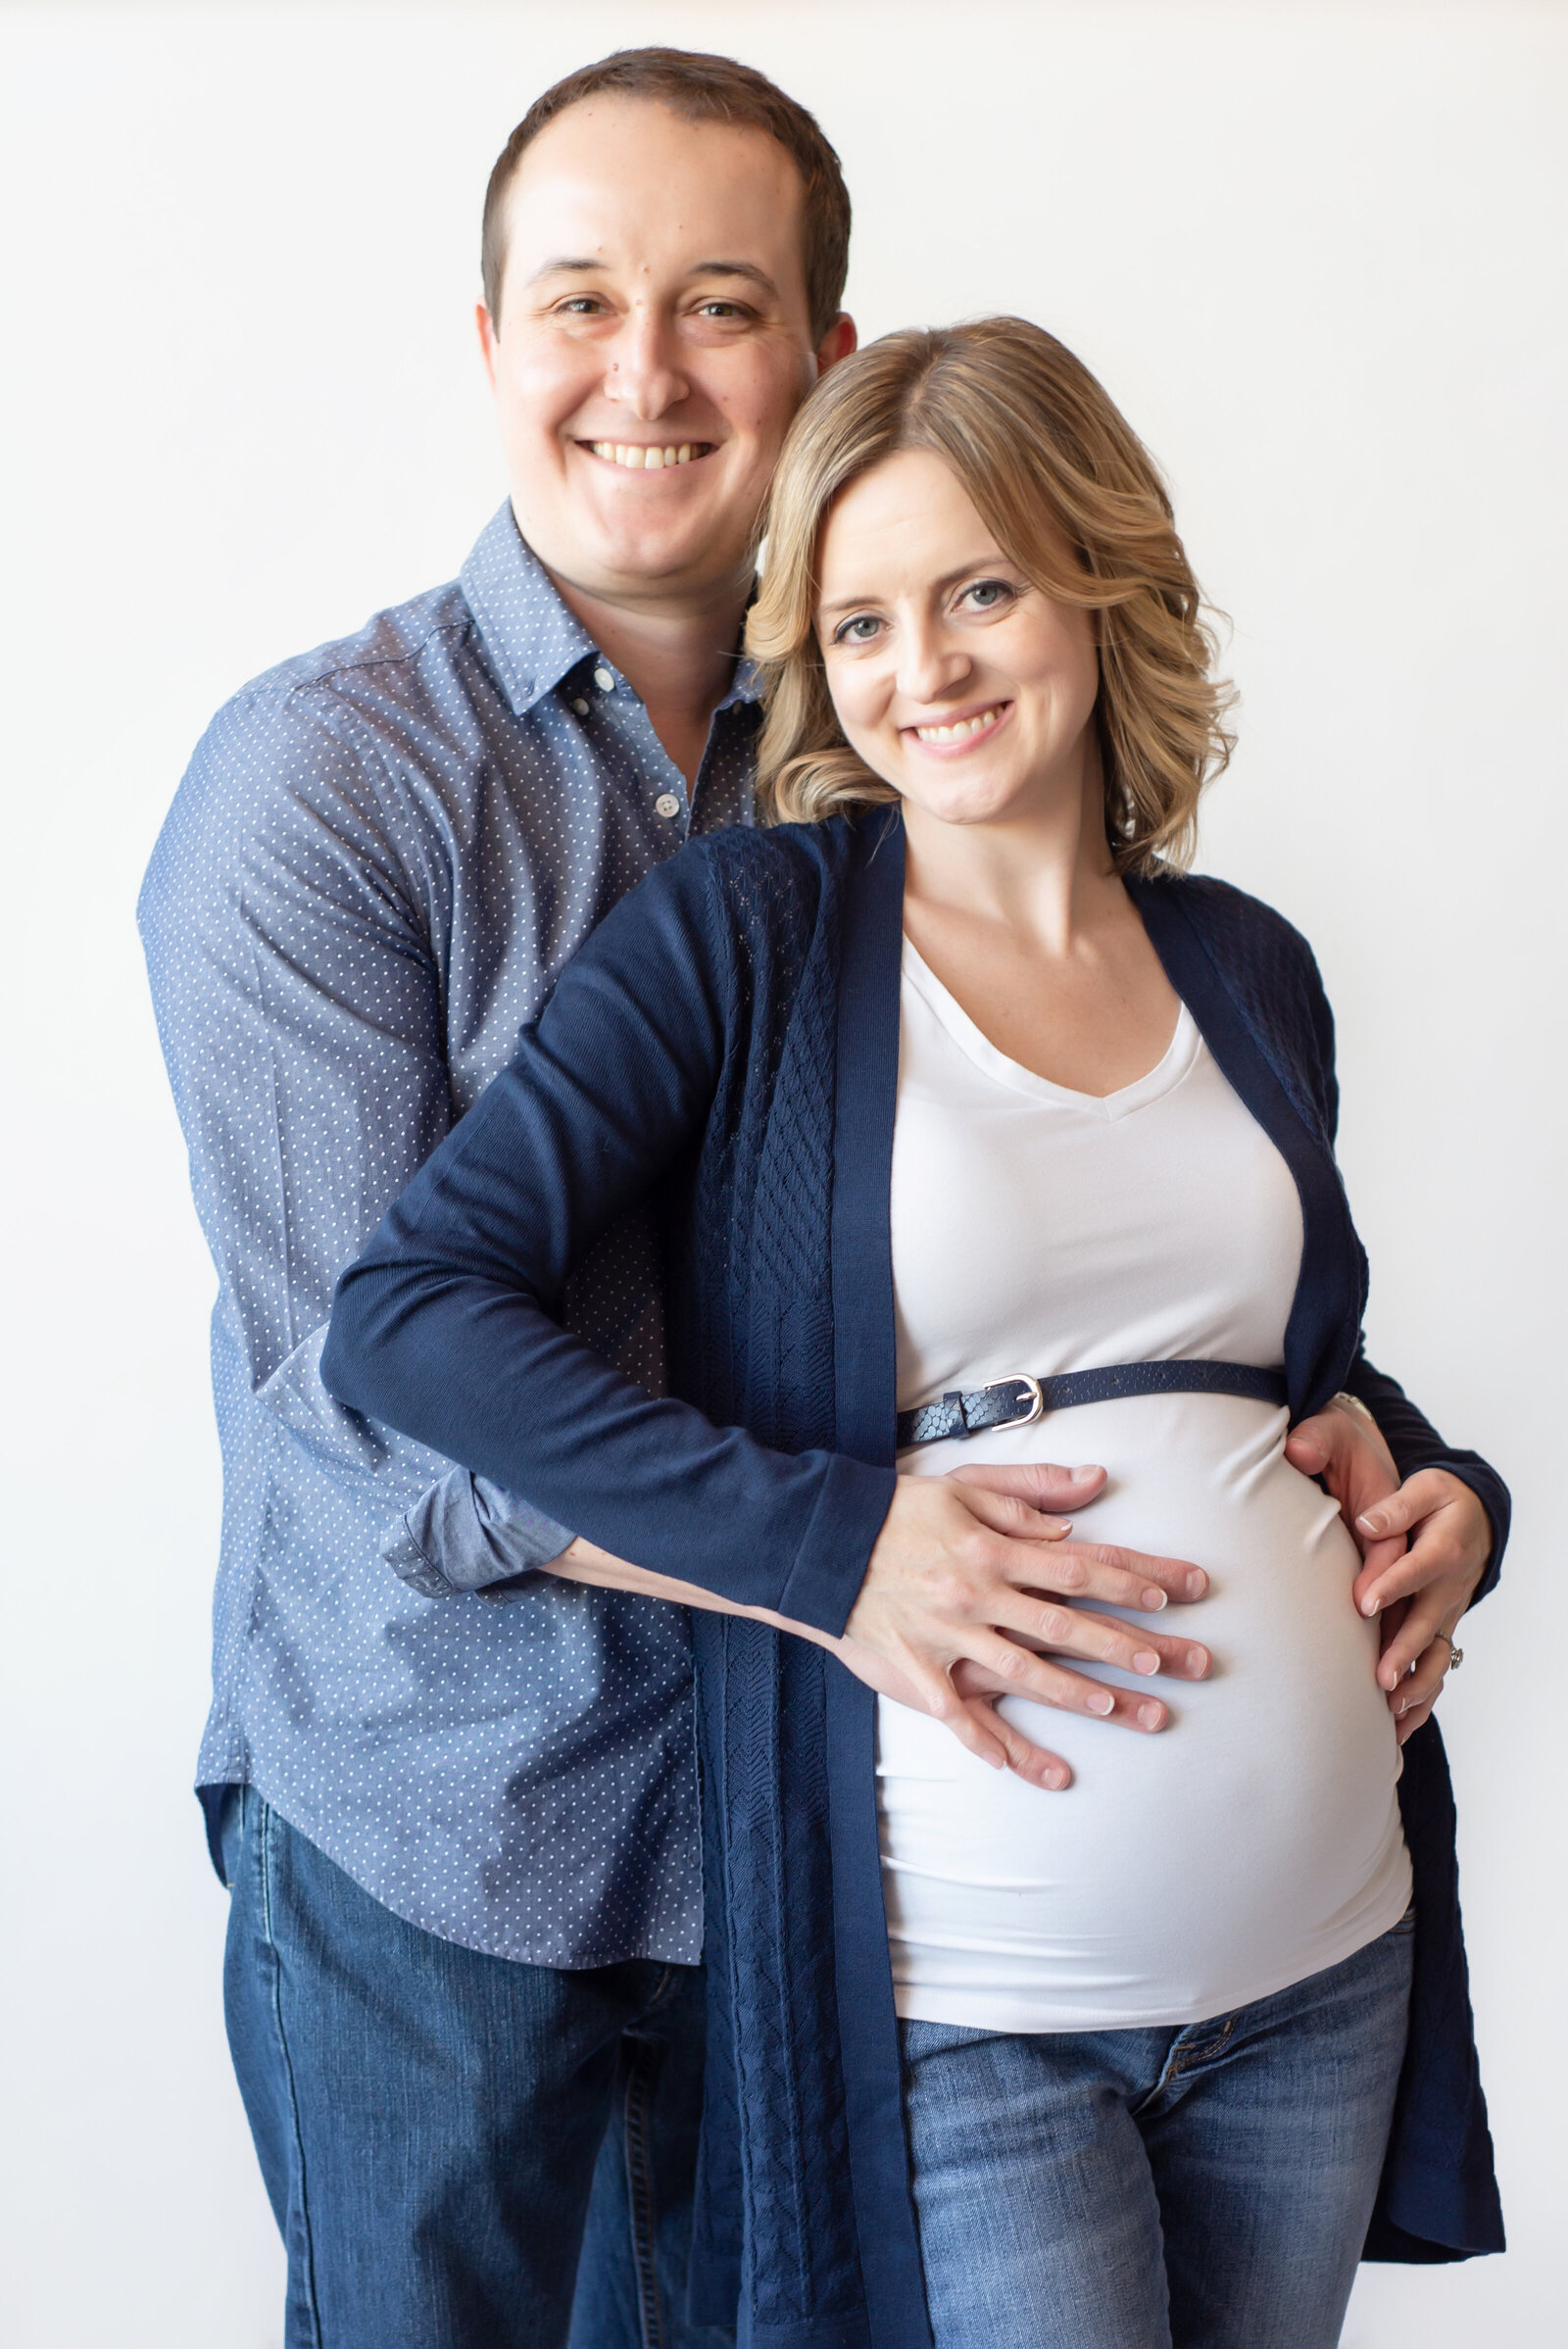 Pregnant couple in maternity photo in studio